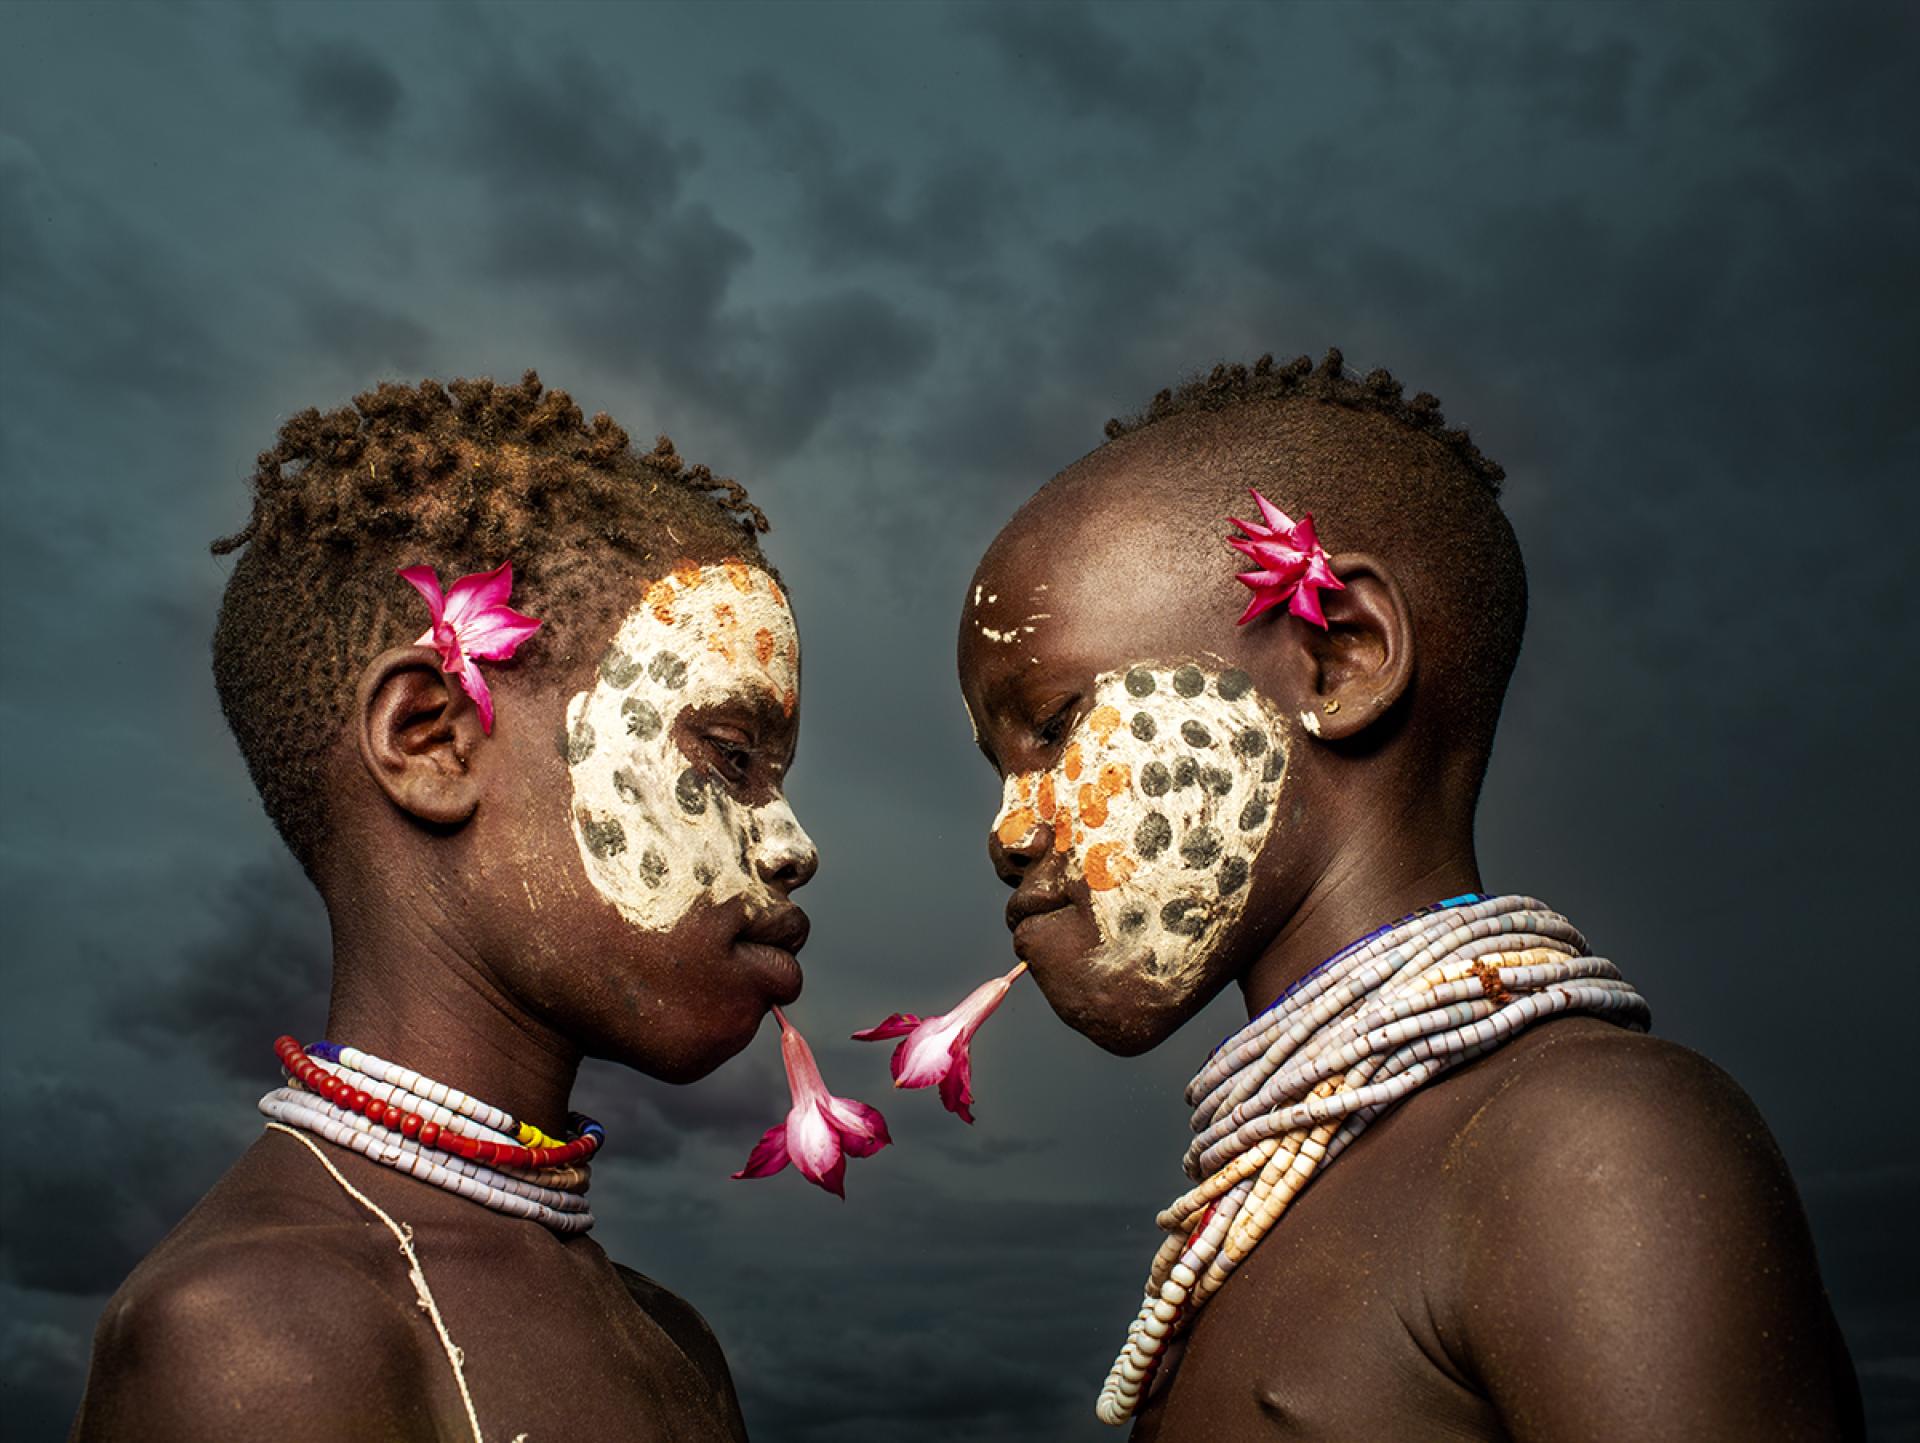 London Photography Awards Winner - Indigenous Kids